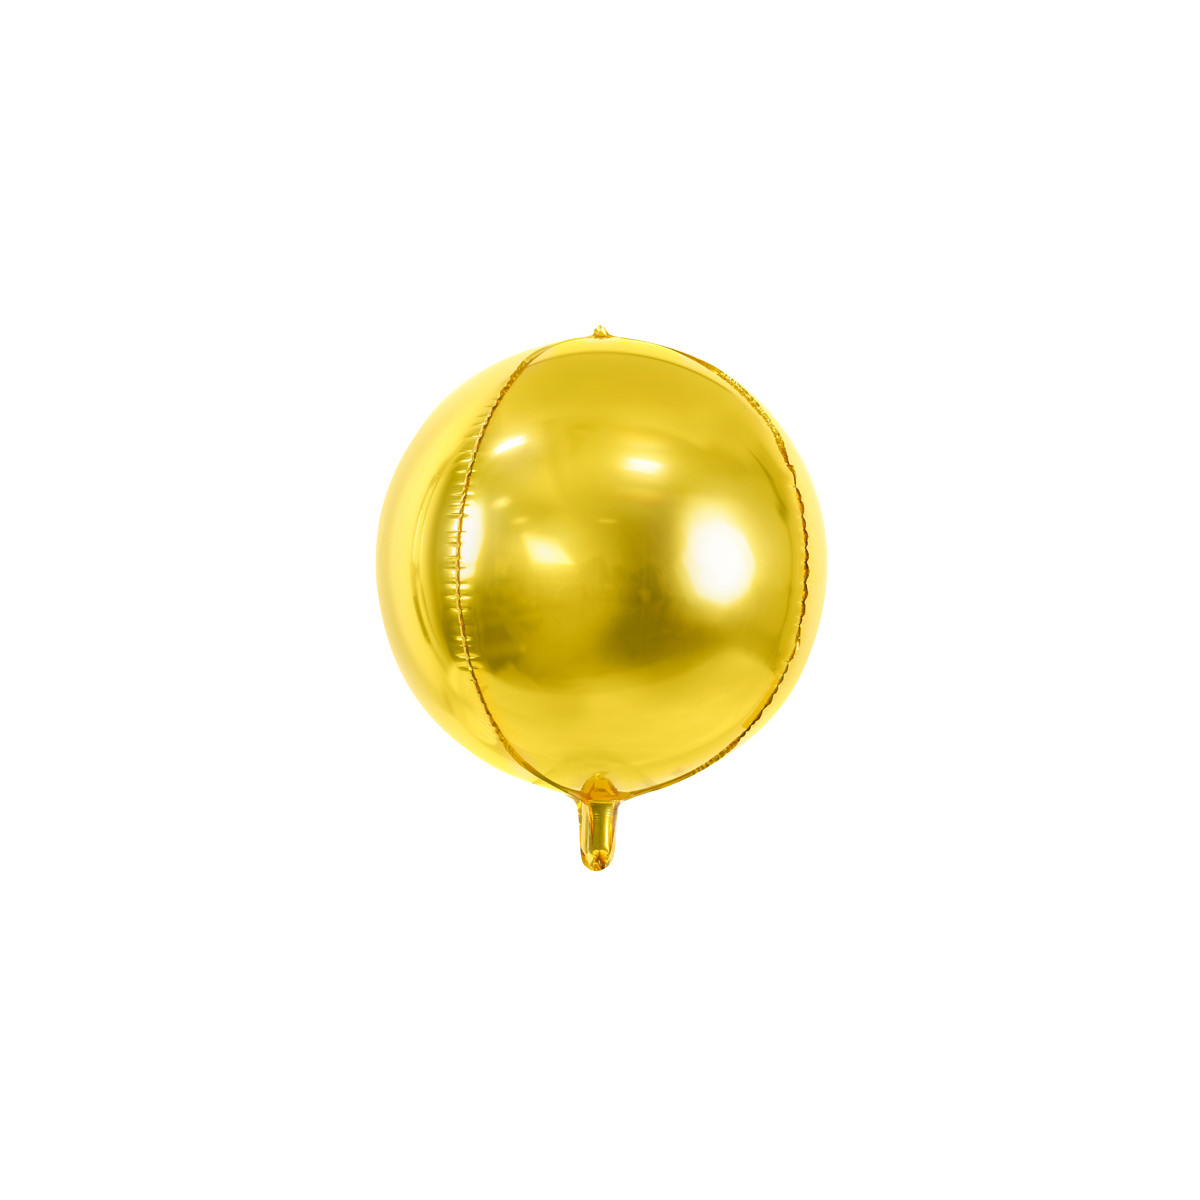 Ballon Mylar jaune gold